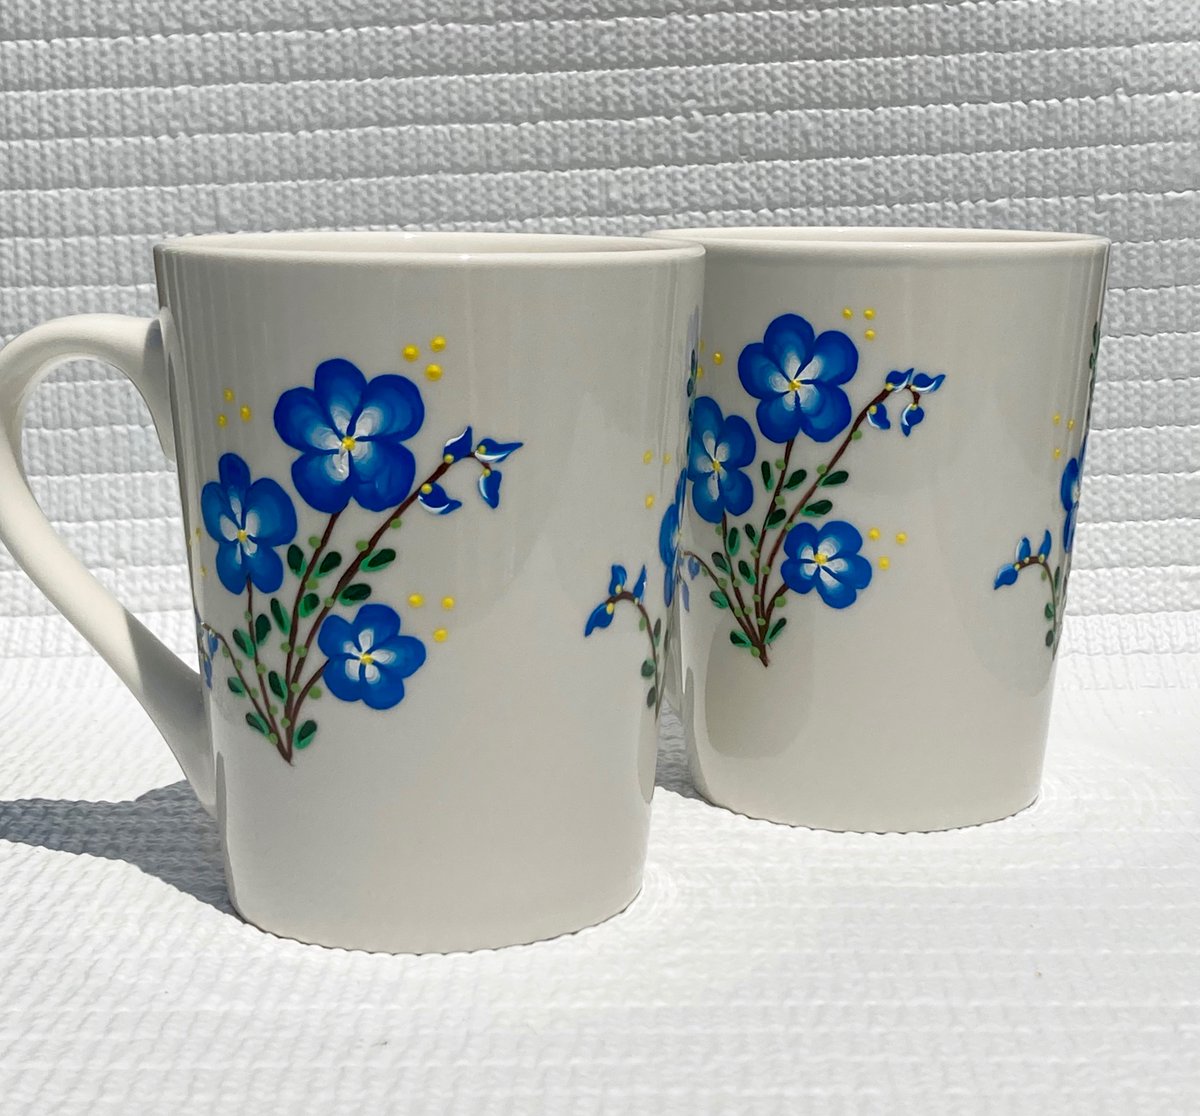 Painted coffee mugs etsy.com/listing/103268… #coffeemugs #coffeecups #paintedmugs #homedecor #kitchendecor #giftforcouple #uniquegifts